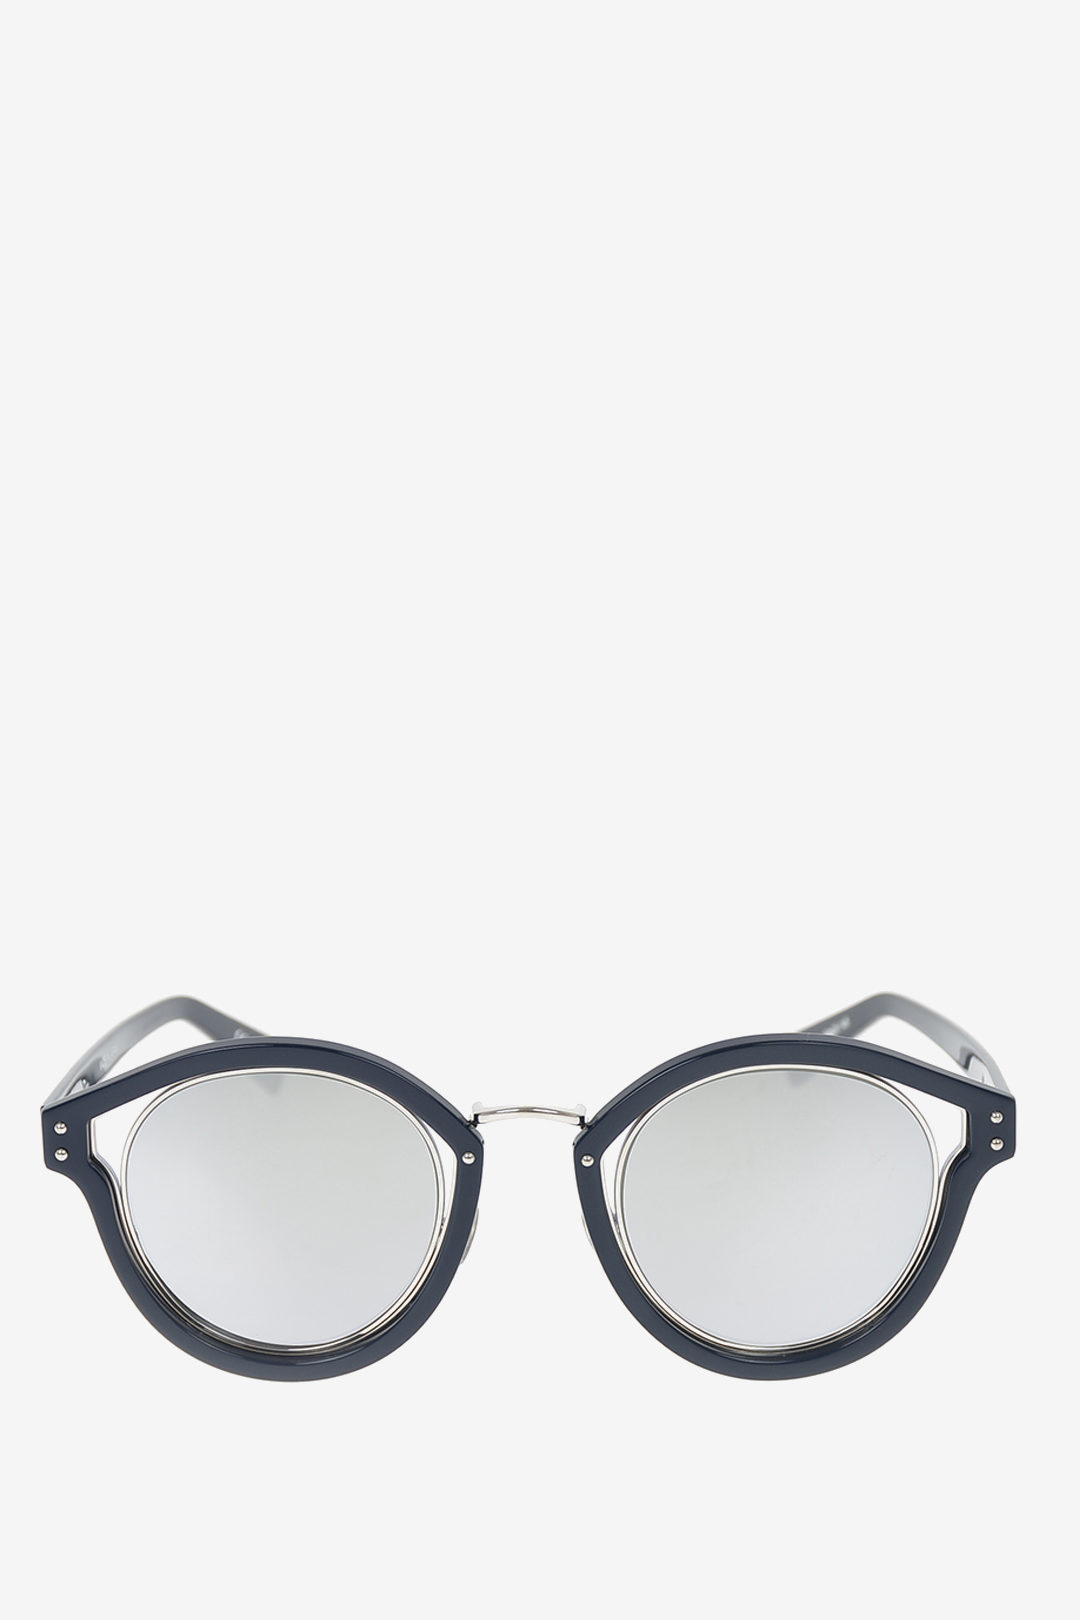 Christian Dior Futuristic Mirror Sunglasses  PauméLosAngeles